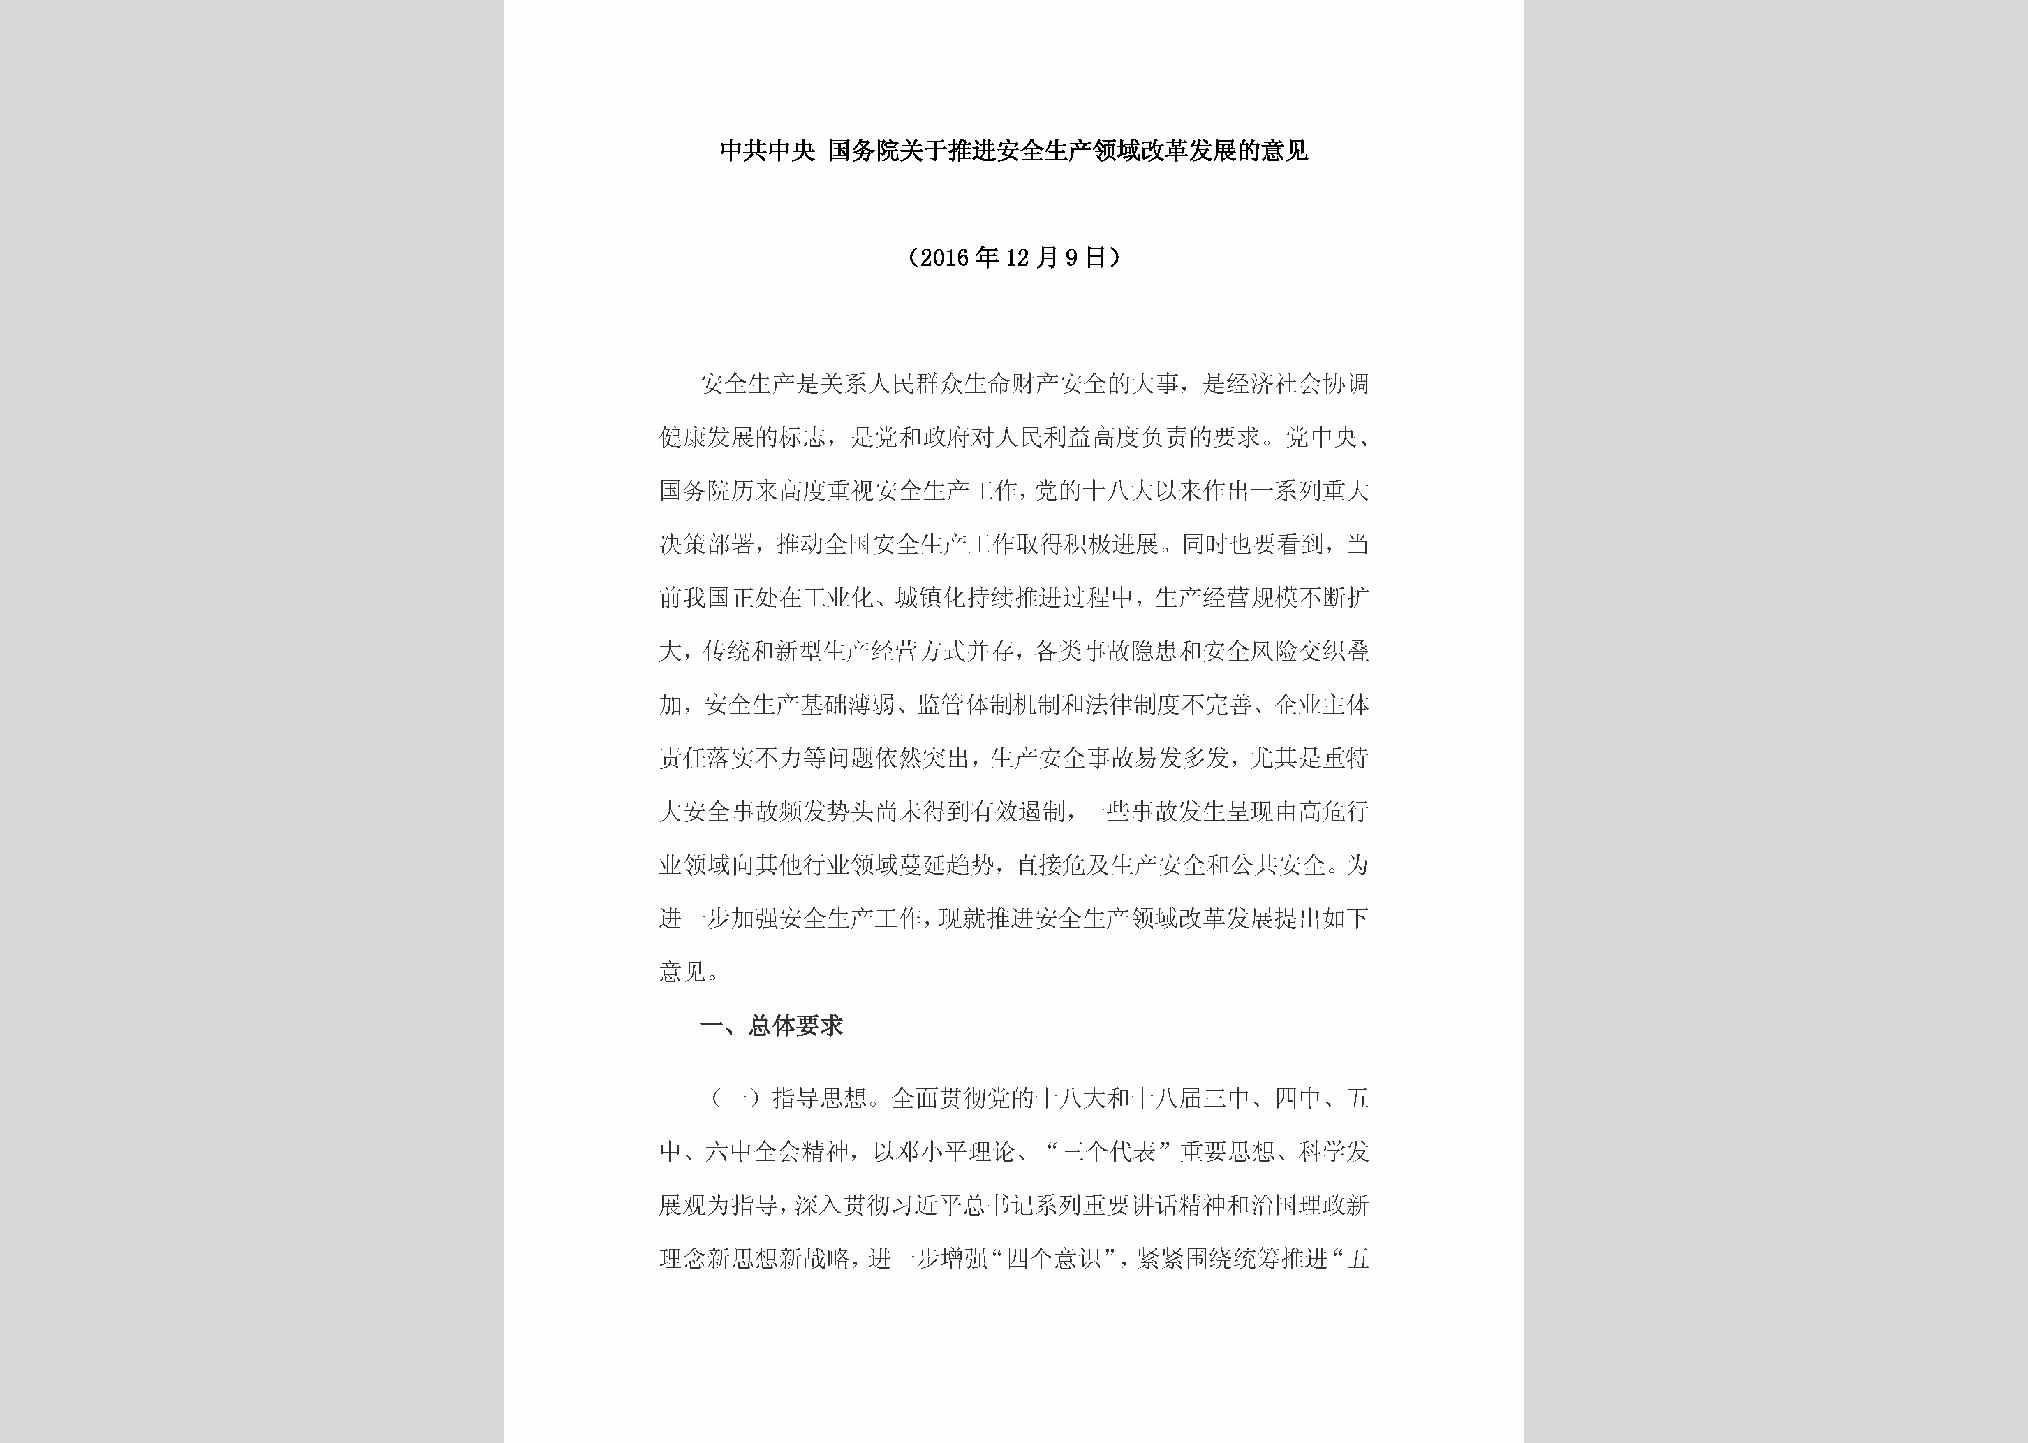 AQSCLYGG：中共中央国务院关于推进安全生产领域改革发展的意见